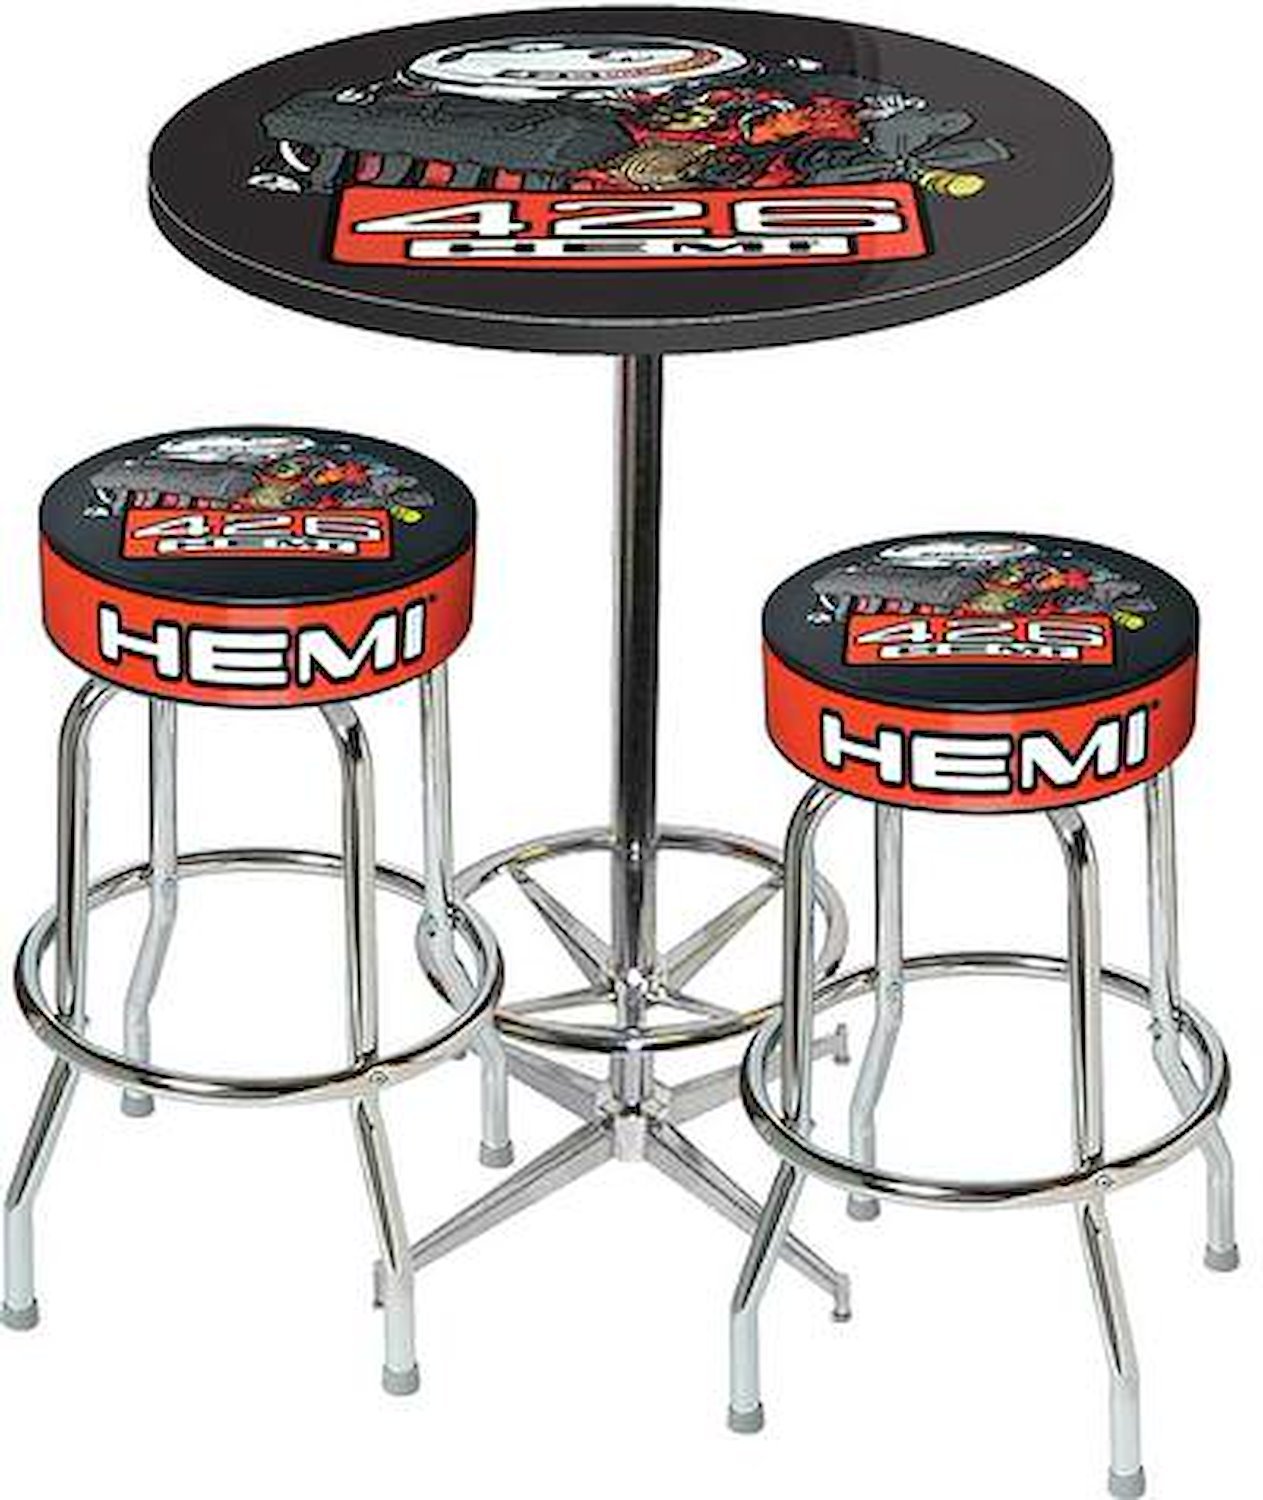 MD67713 Table & Stool Set; Mopar 426 Hemi Logo; Chrome Based Table With Foot Rest & 2 Chrome Stools